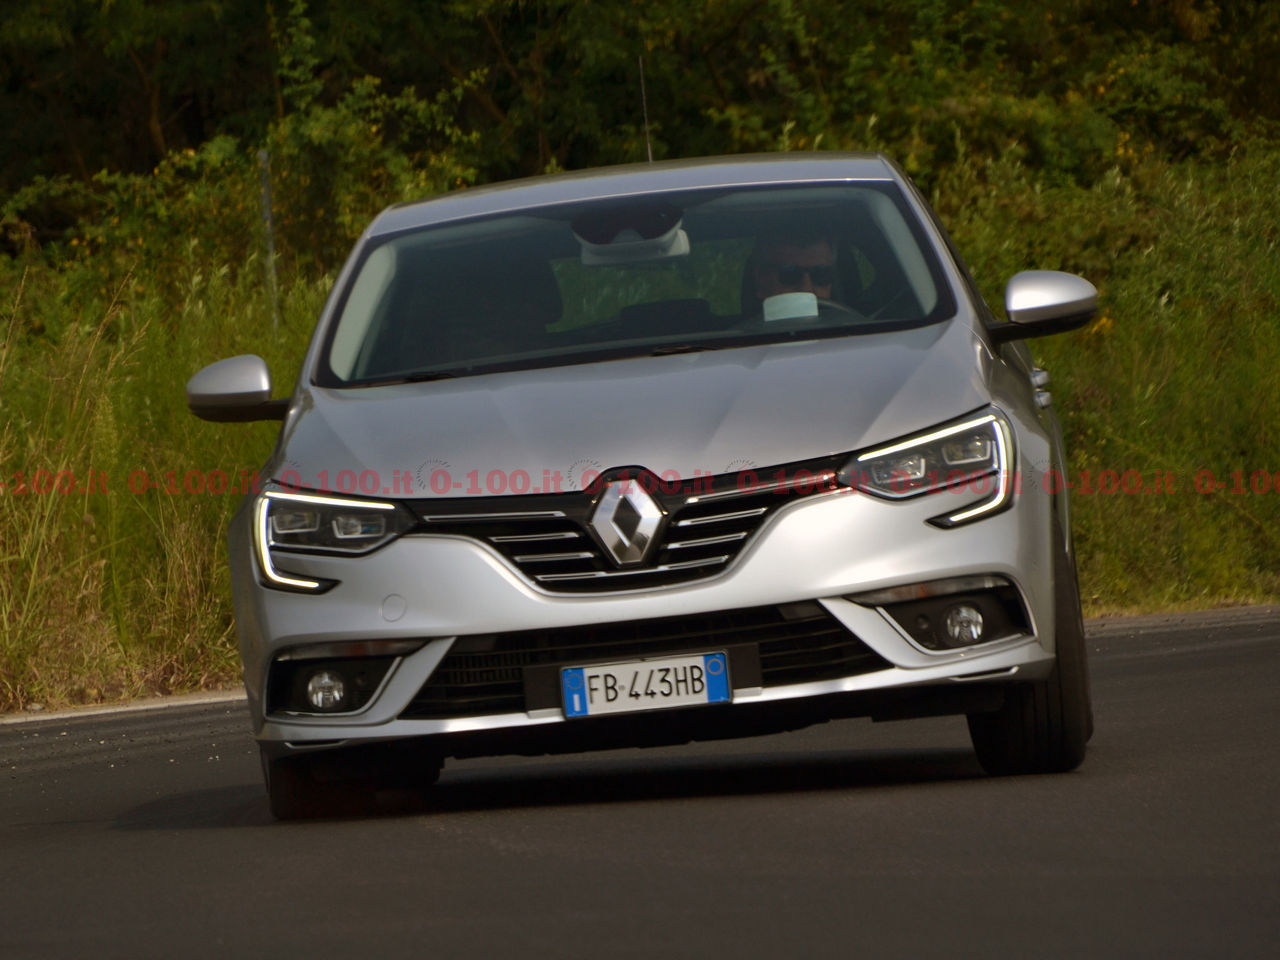 Renault-Megane-GT-Bose-dCi-130-test-prova-opinioni_0-100_16